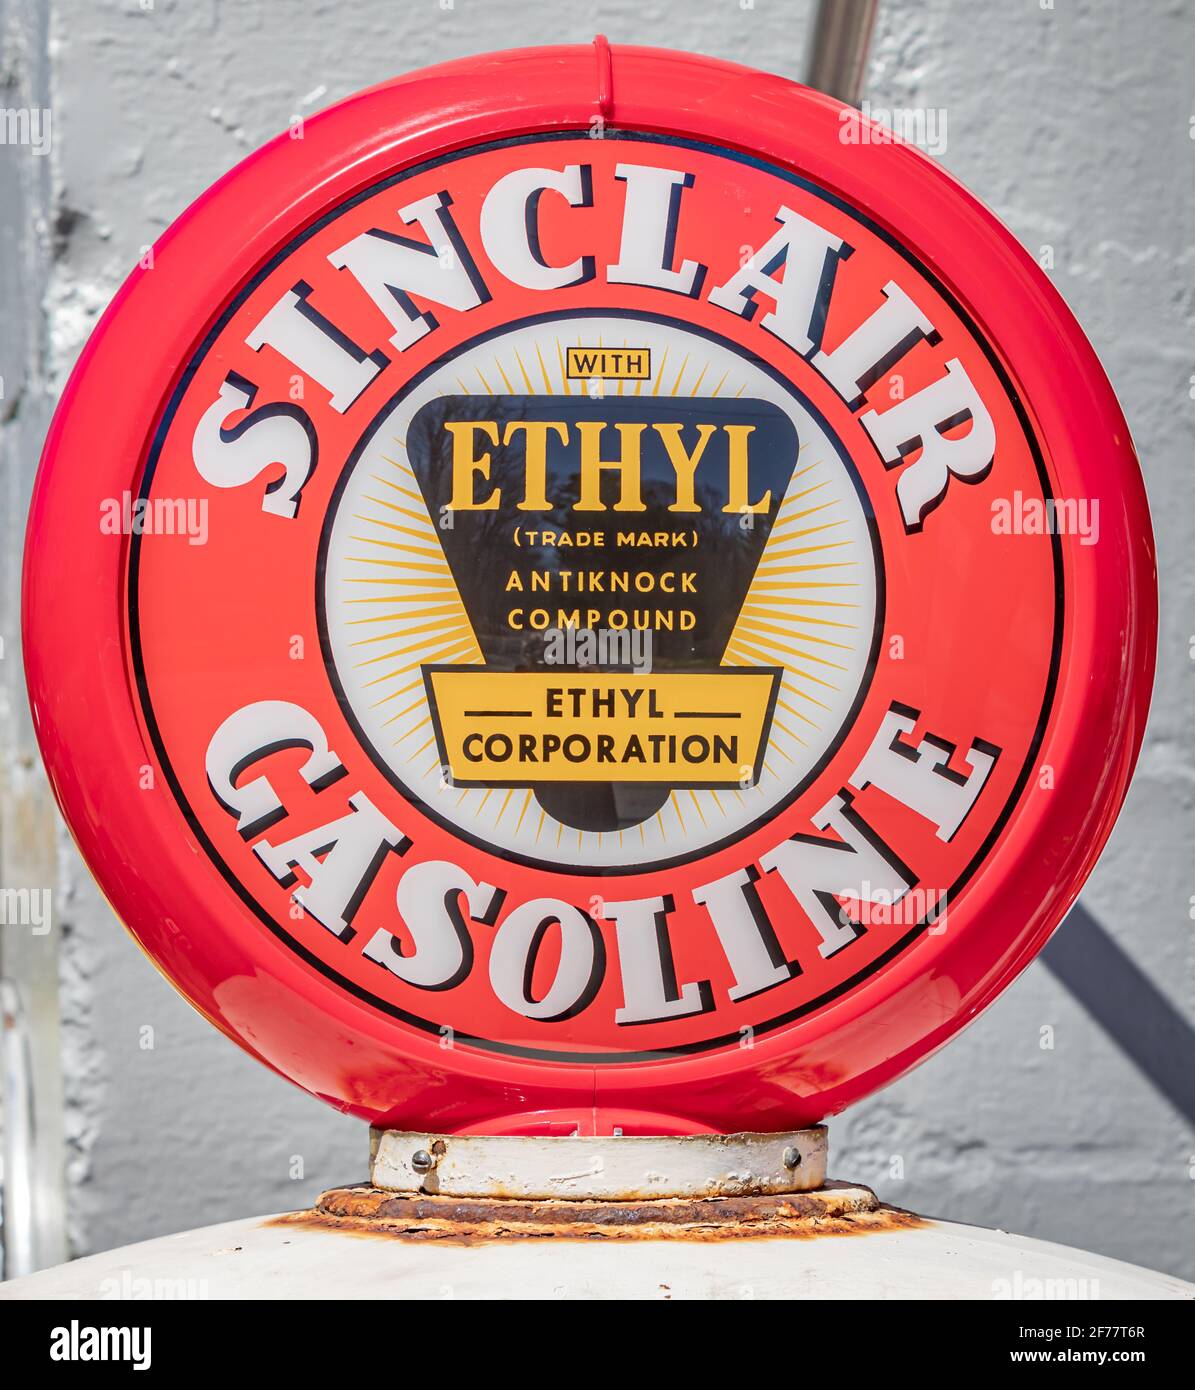 Immagine dettagliata di una pompa a benzina Sinclair Foto Stock